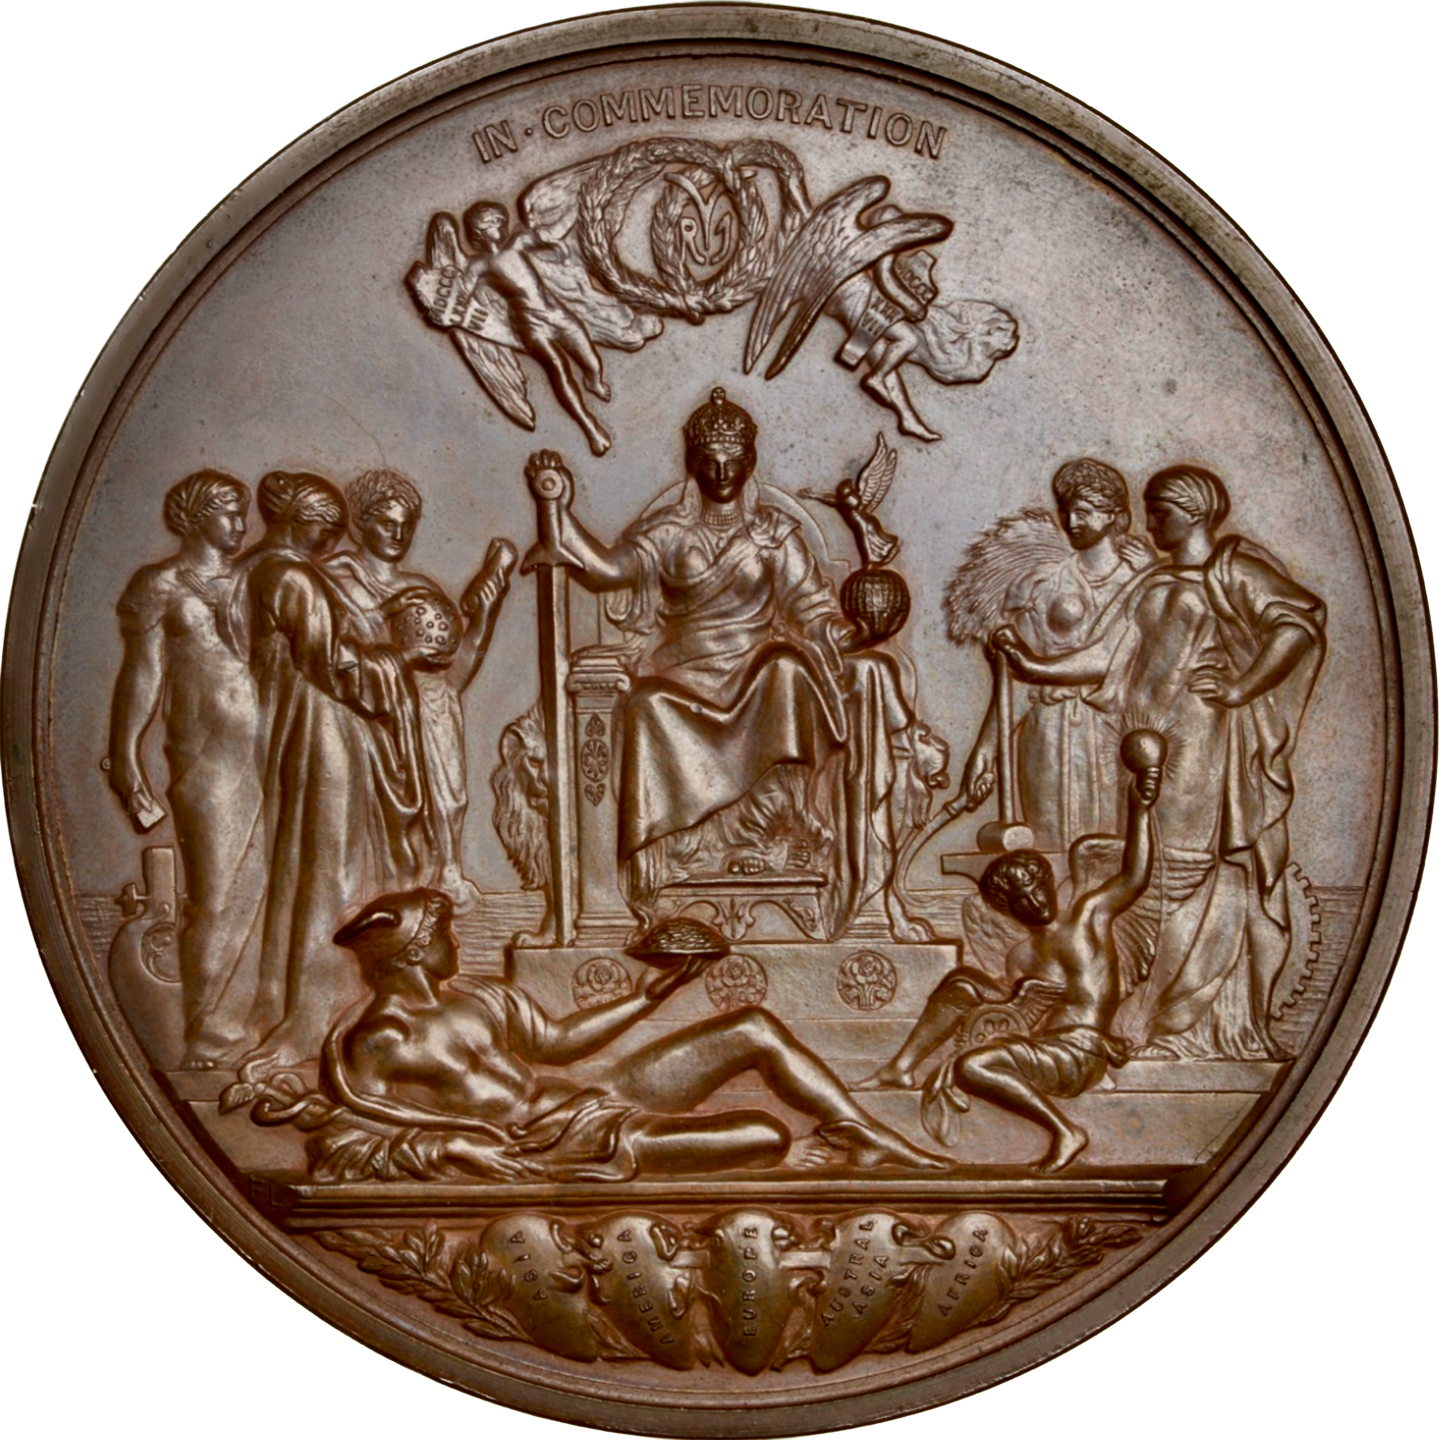 1887 Golden Jubilee BHM 3219 E1733b 77mm bronze medal in box of issue